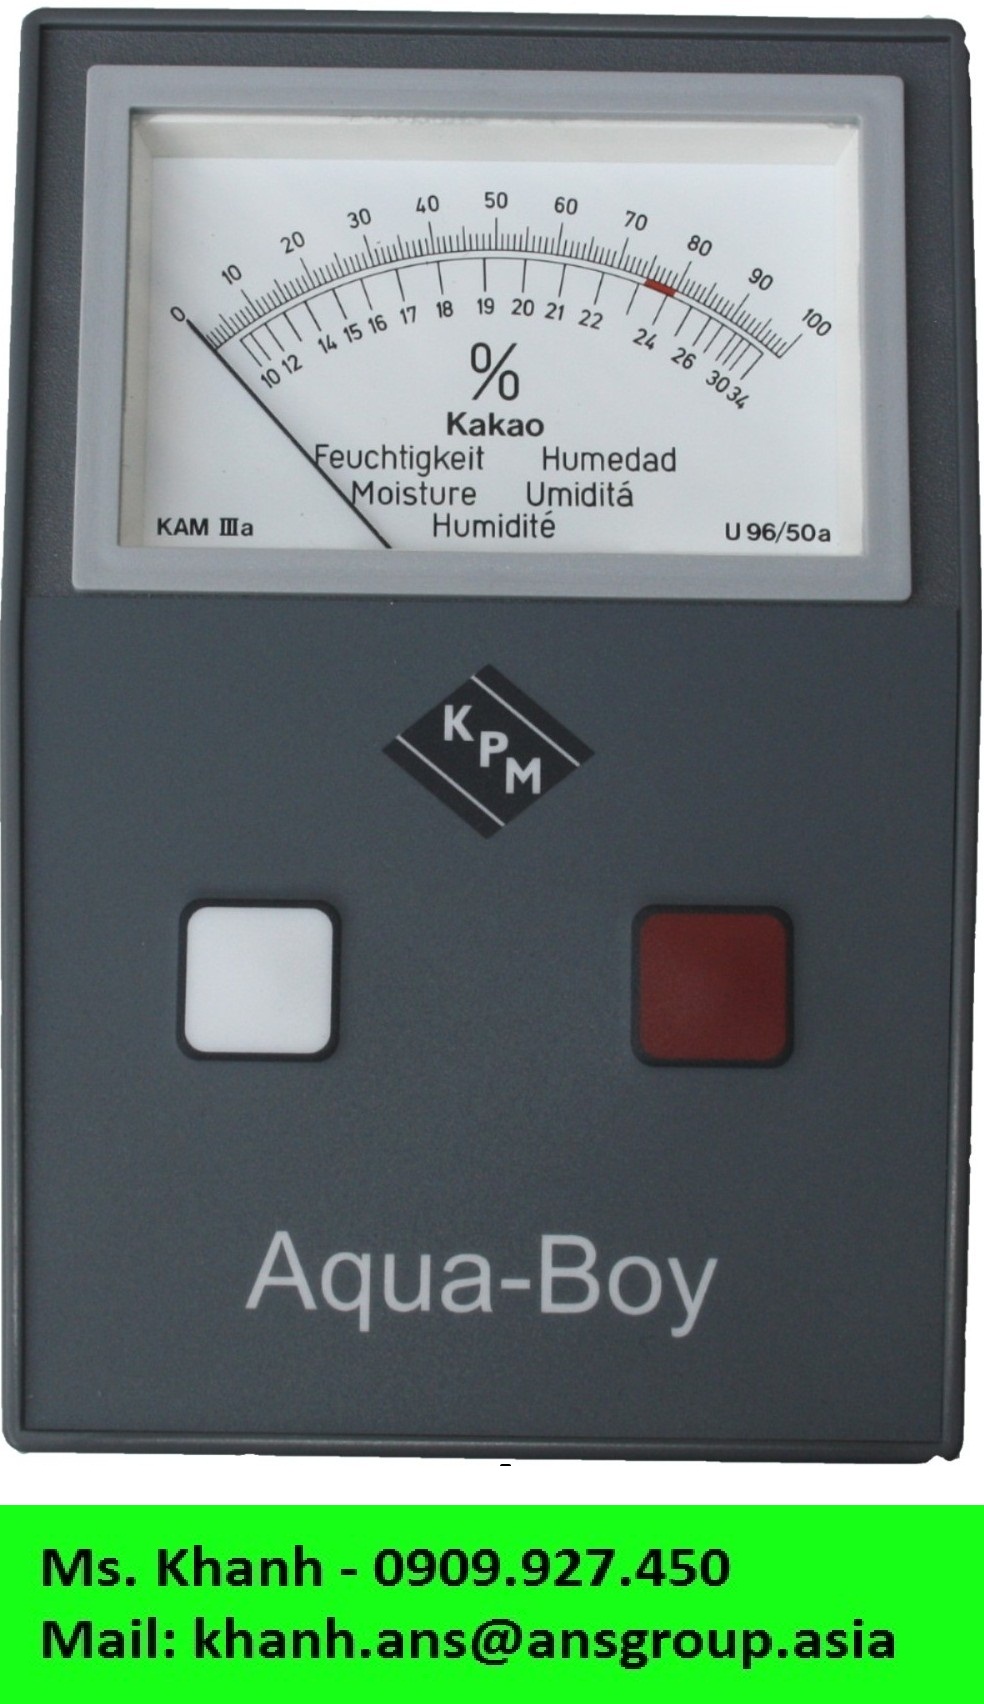 aqua-boy-kamiiia-cocoa-moisture-meter.png